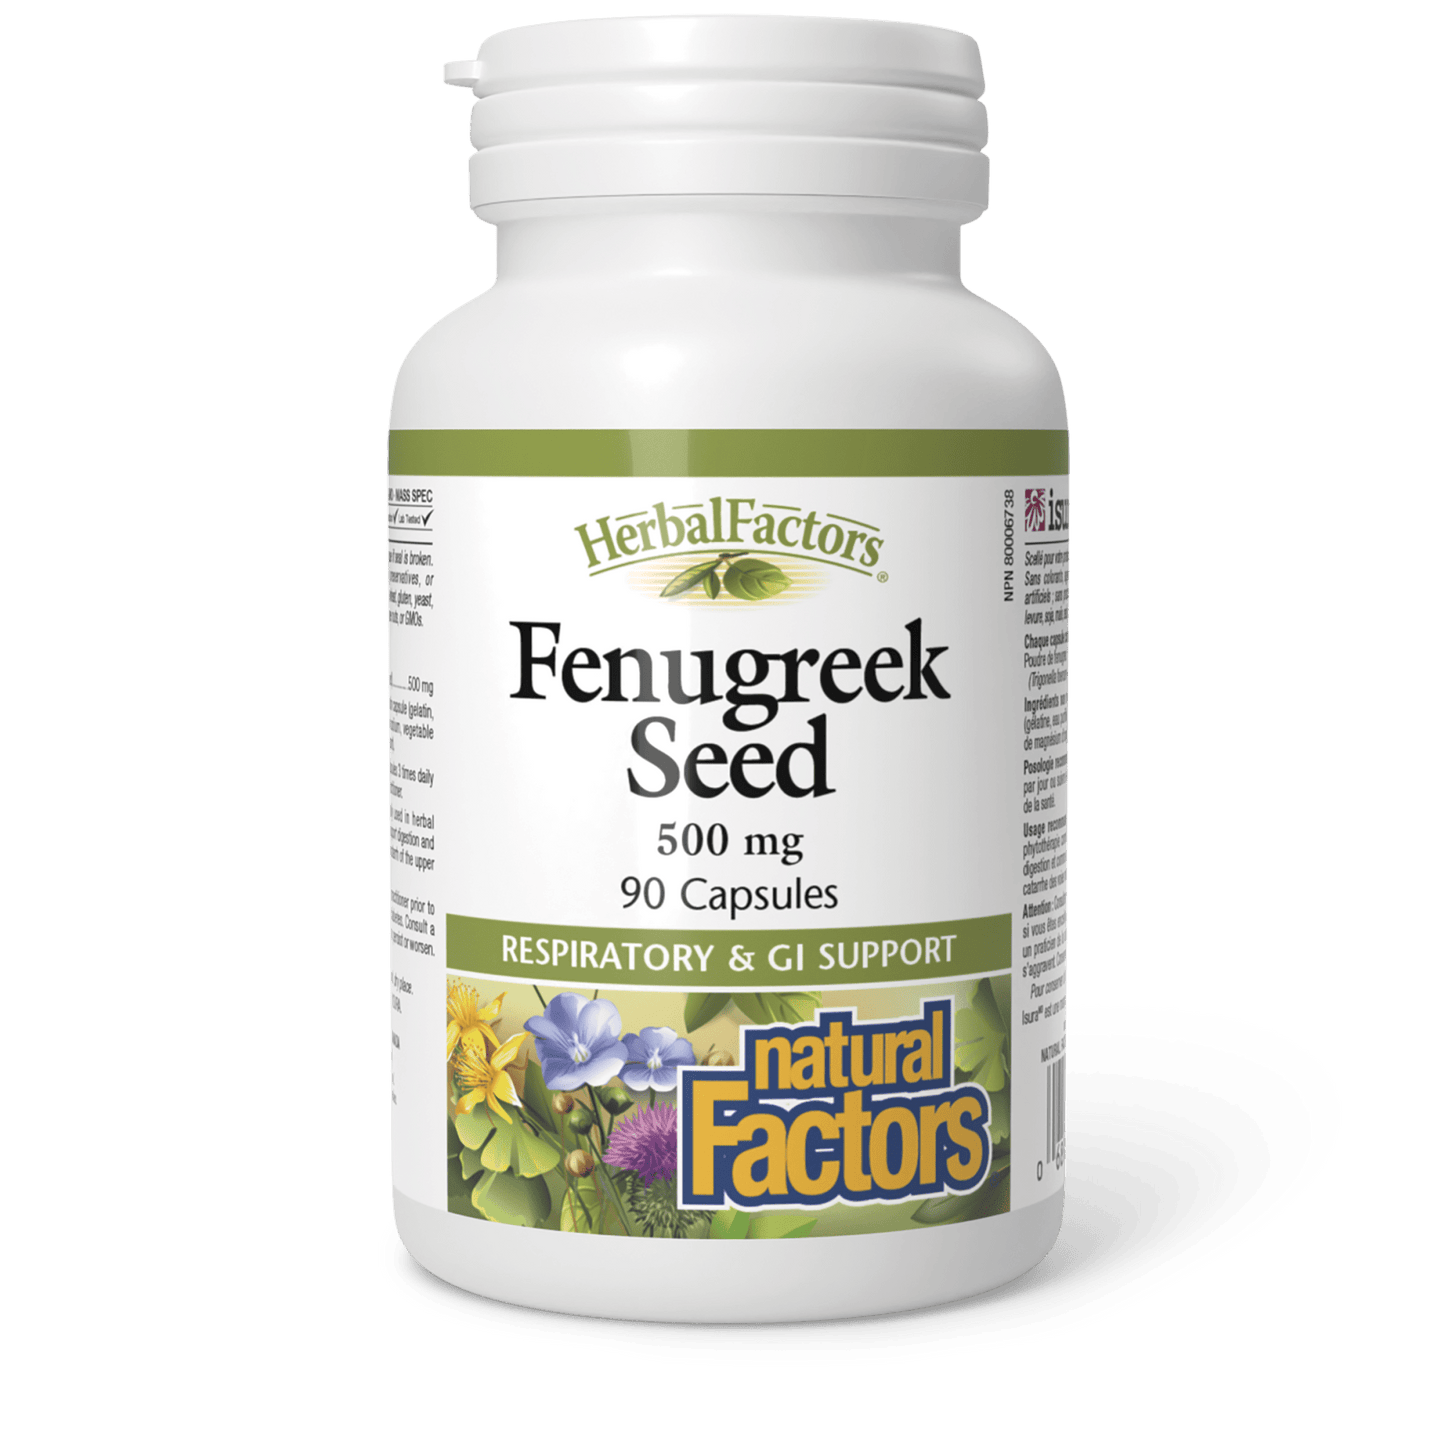 Fenugreek Seed 500 mg, HerbalFactors, Natural Factors|v|image|2200